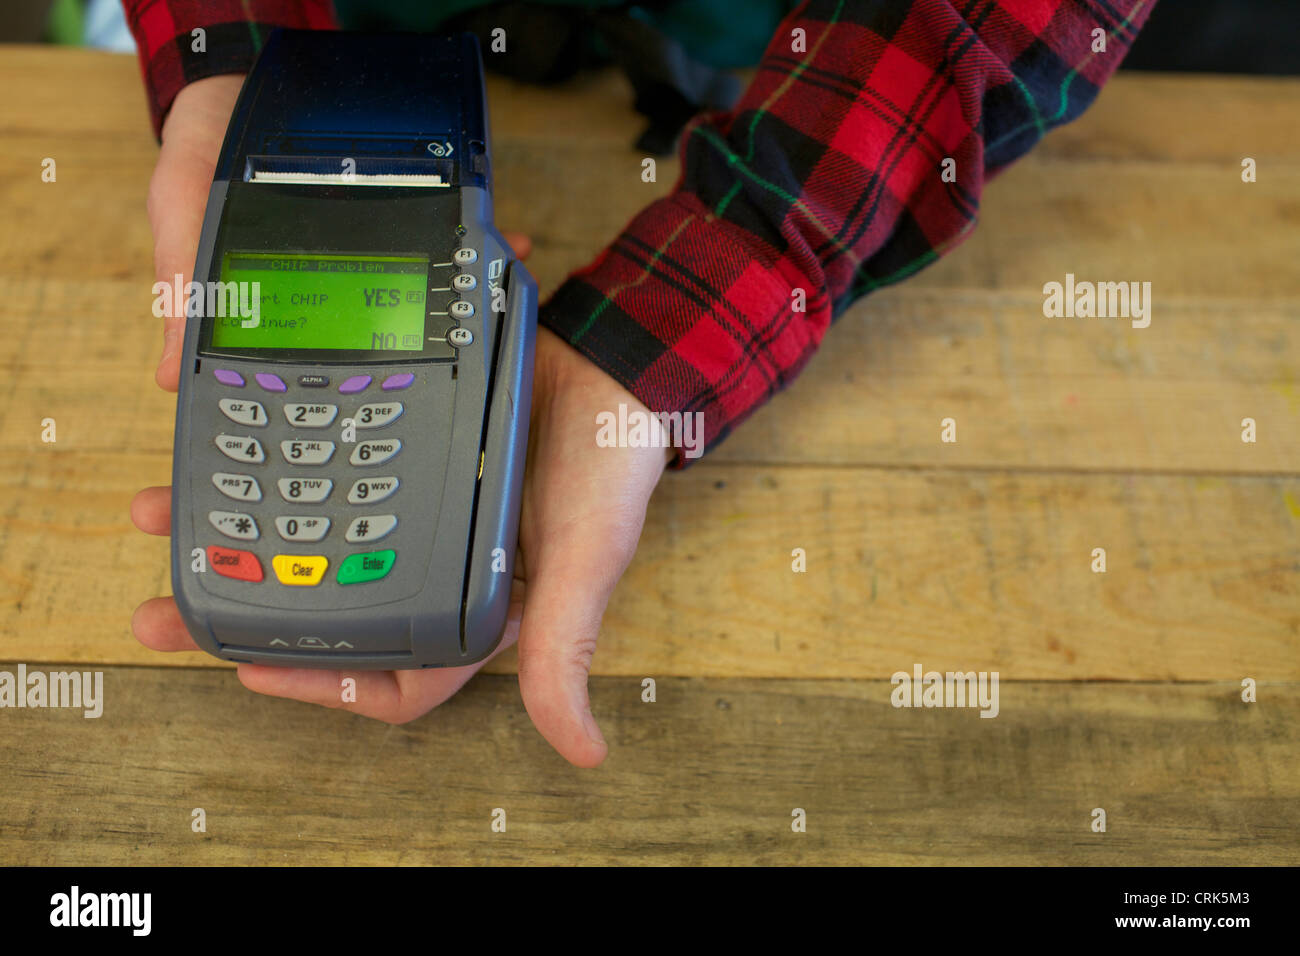 Lebensmittelhändler Besitz Kreditkarte Maschine Stockfoto